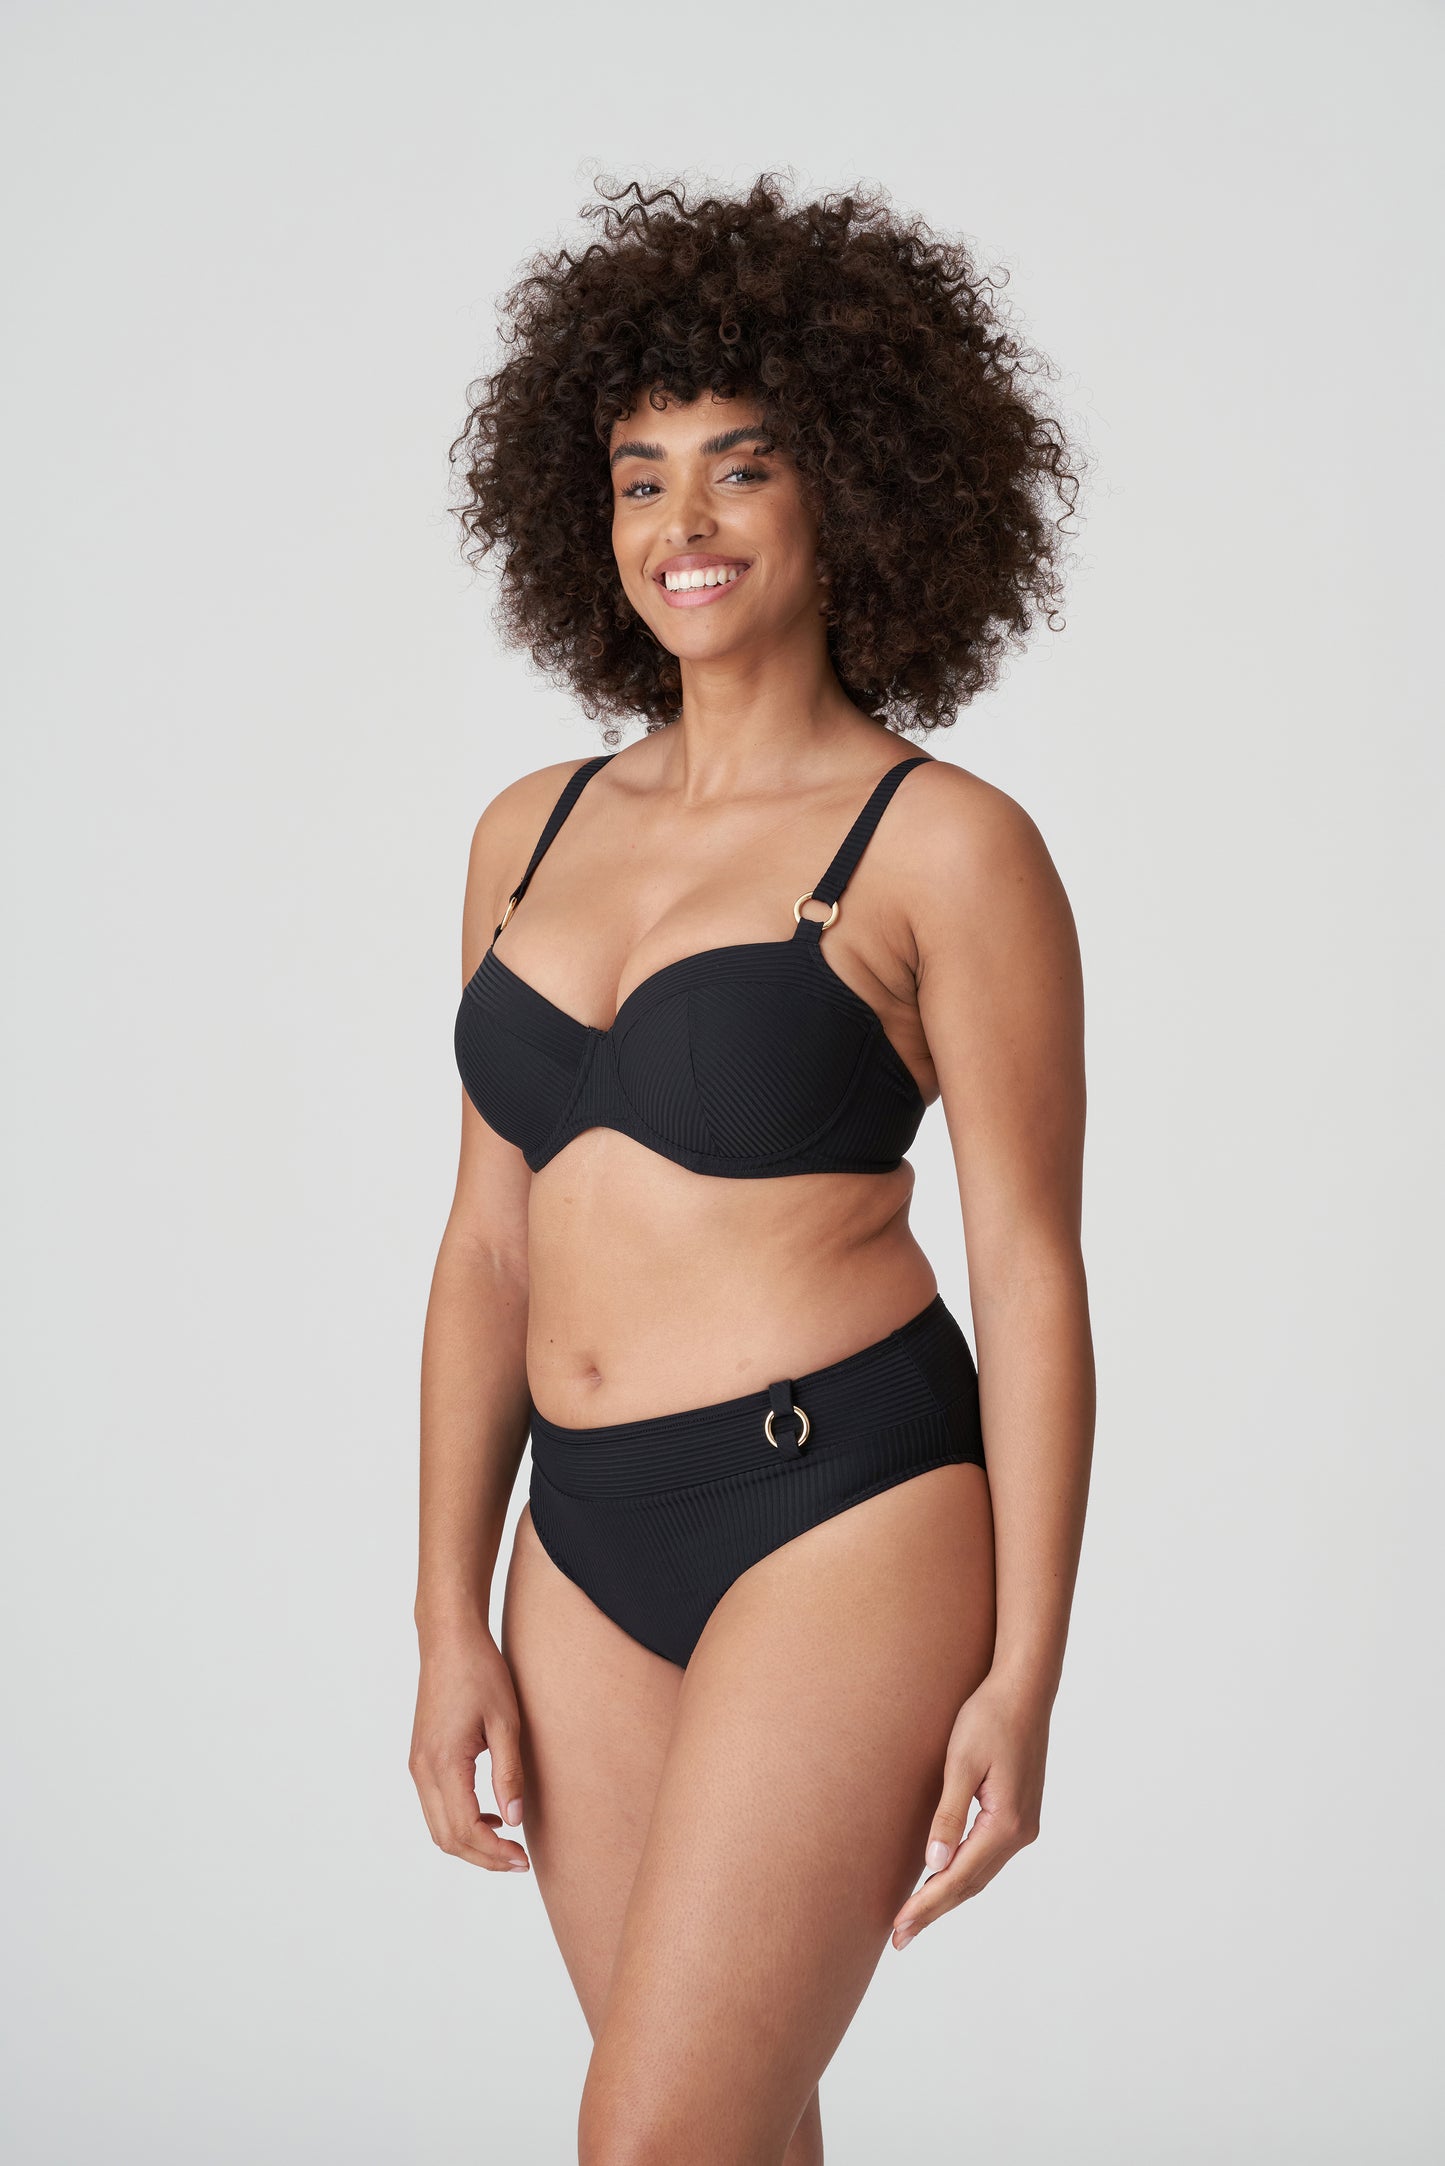 PrimaDonna Swim Sahara voorgevormde balconette bikini zwart